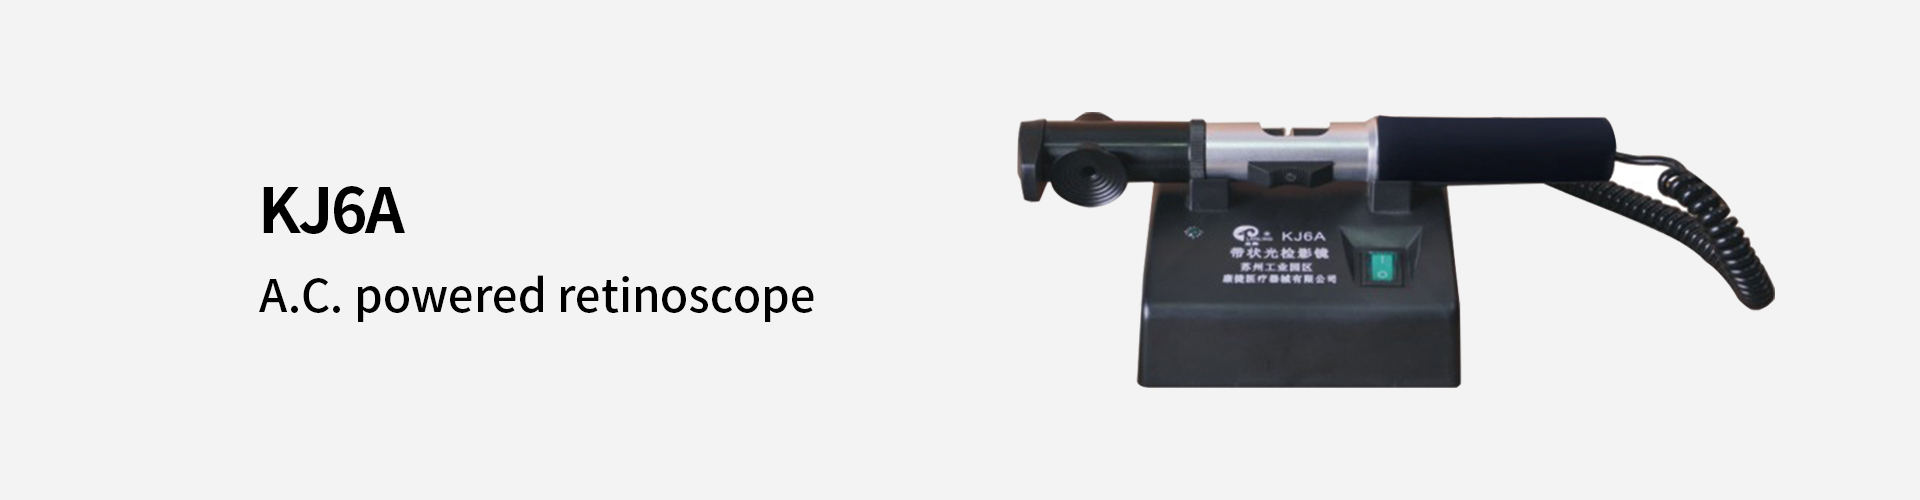 A.C. powered retinoscope